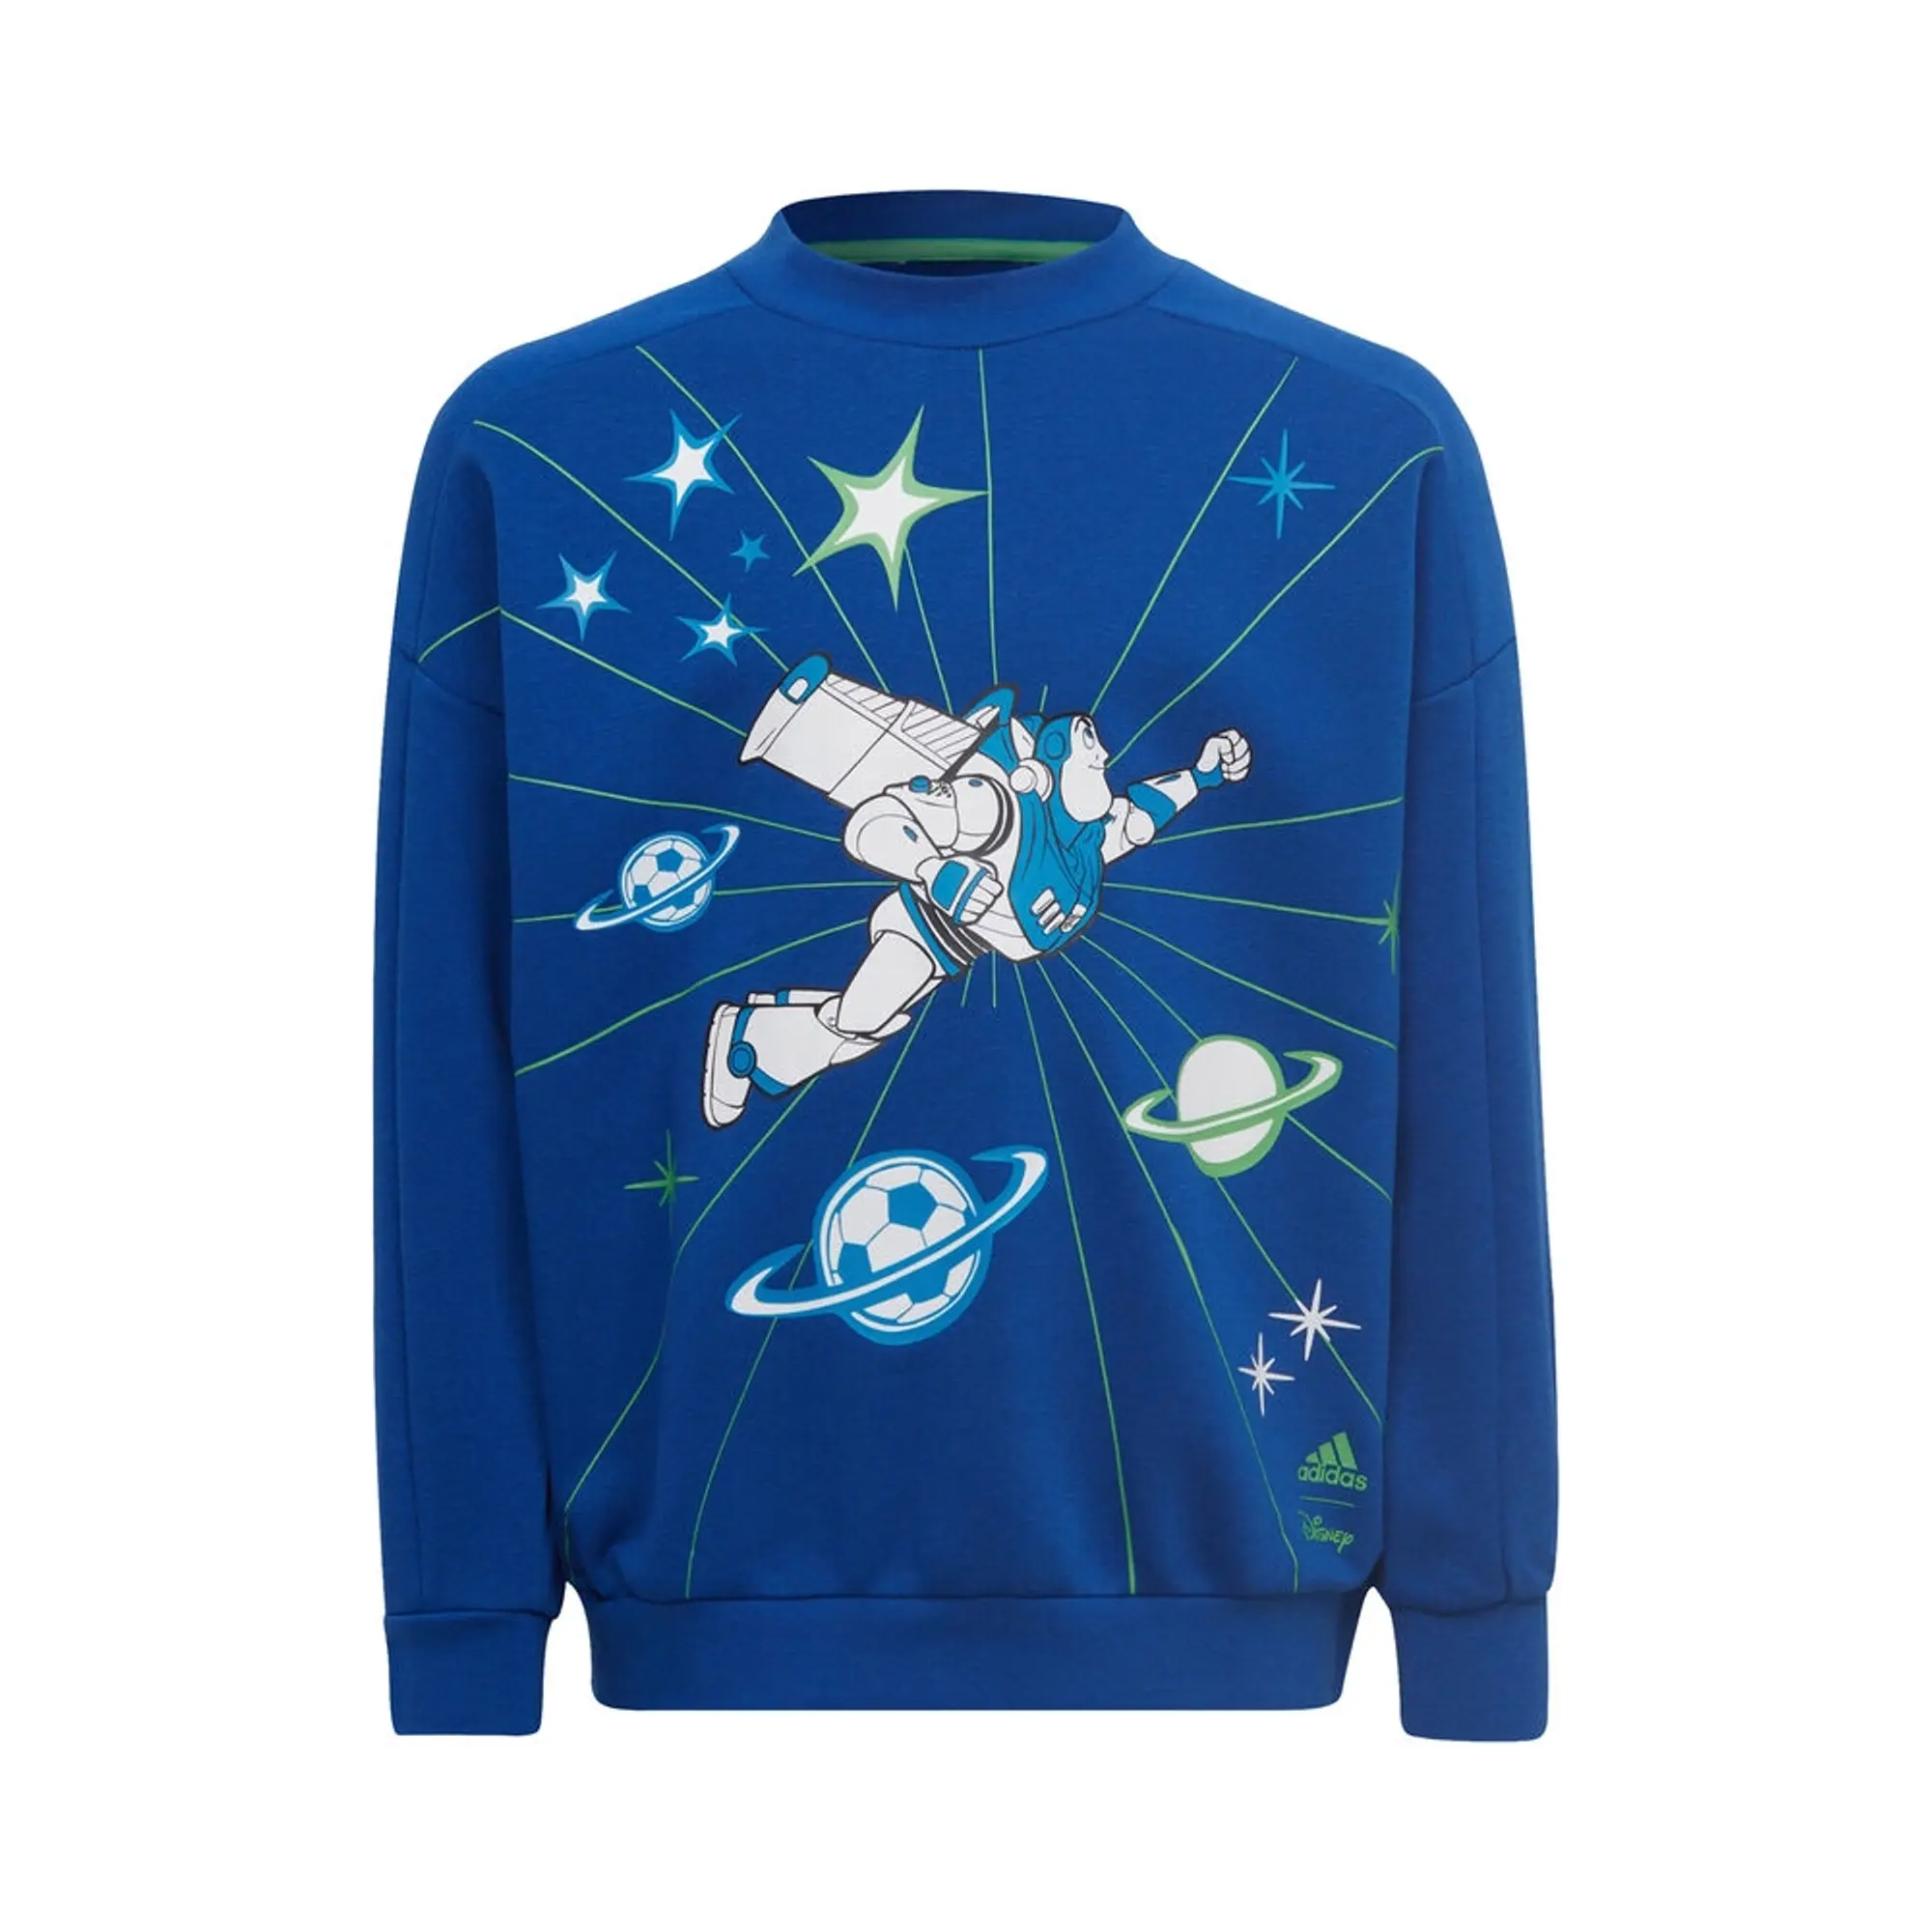 adidas Buzz Lightyear Crew Sweater - Blue